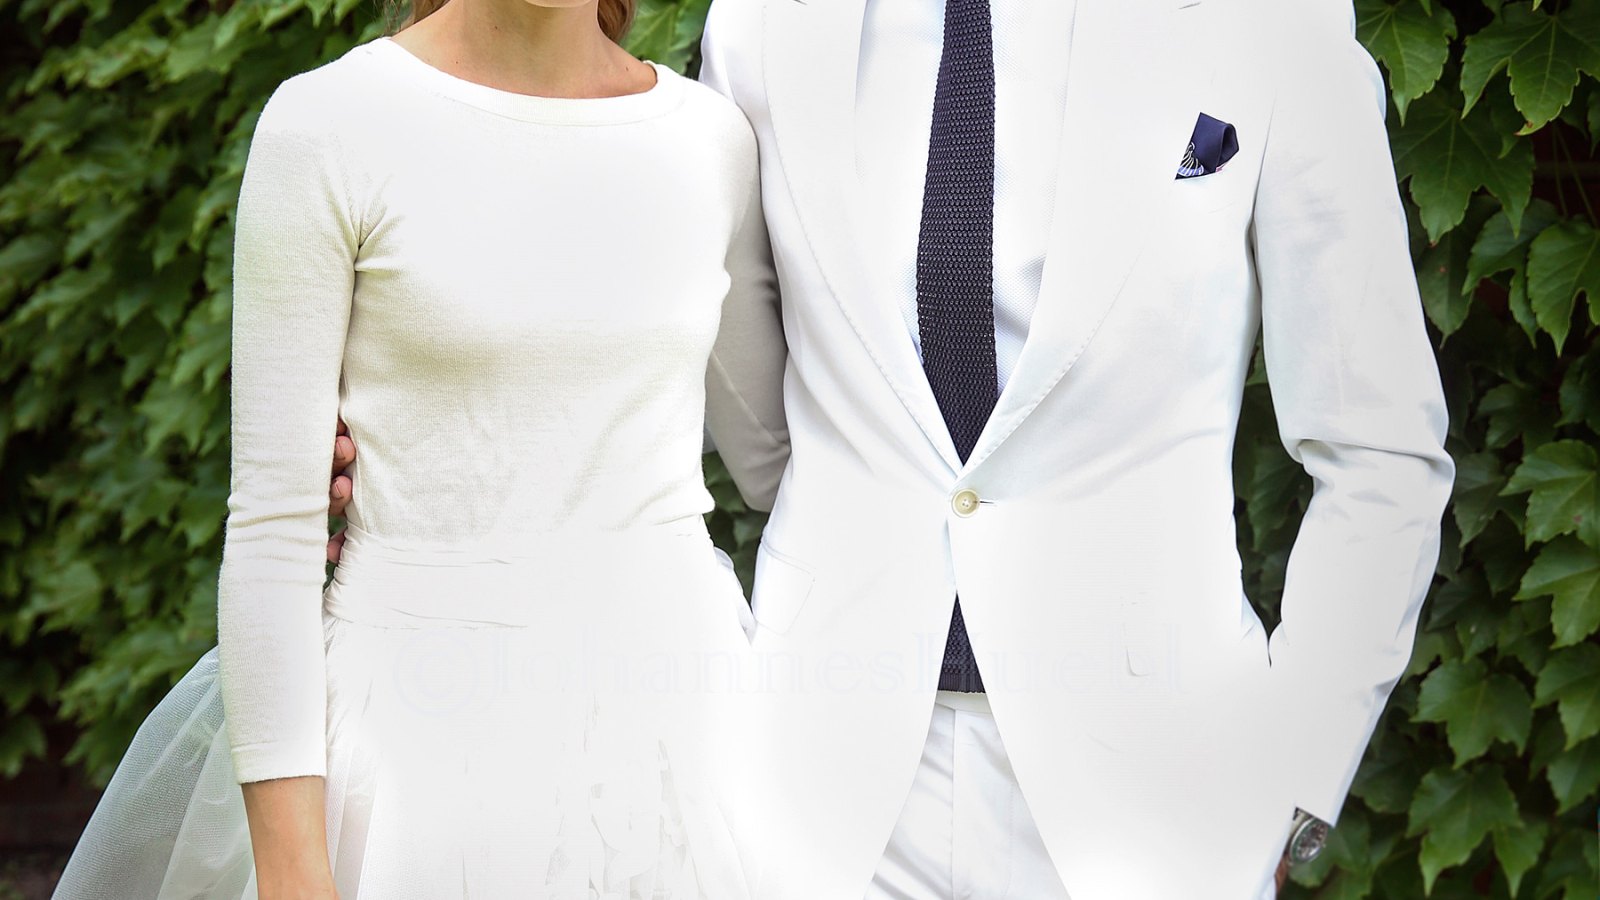 Olivia Palermo and Johannes Huebl on their wedding day